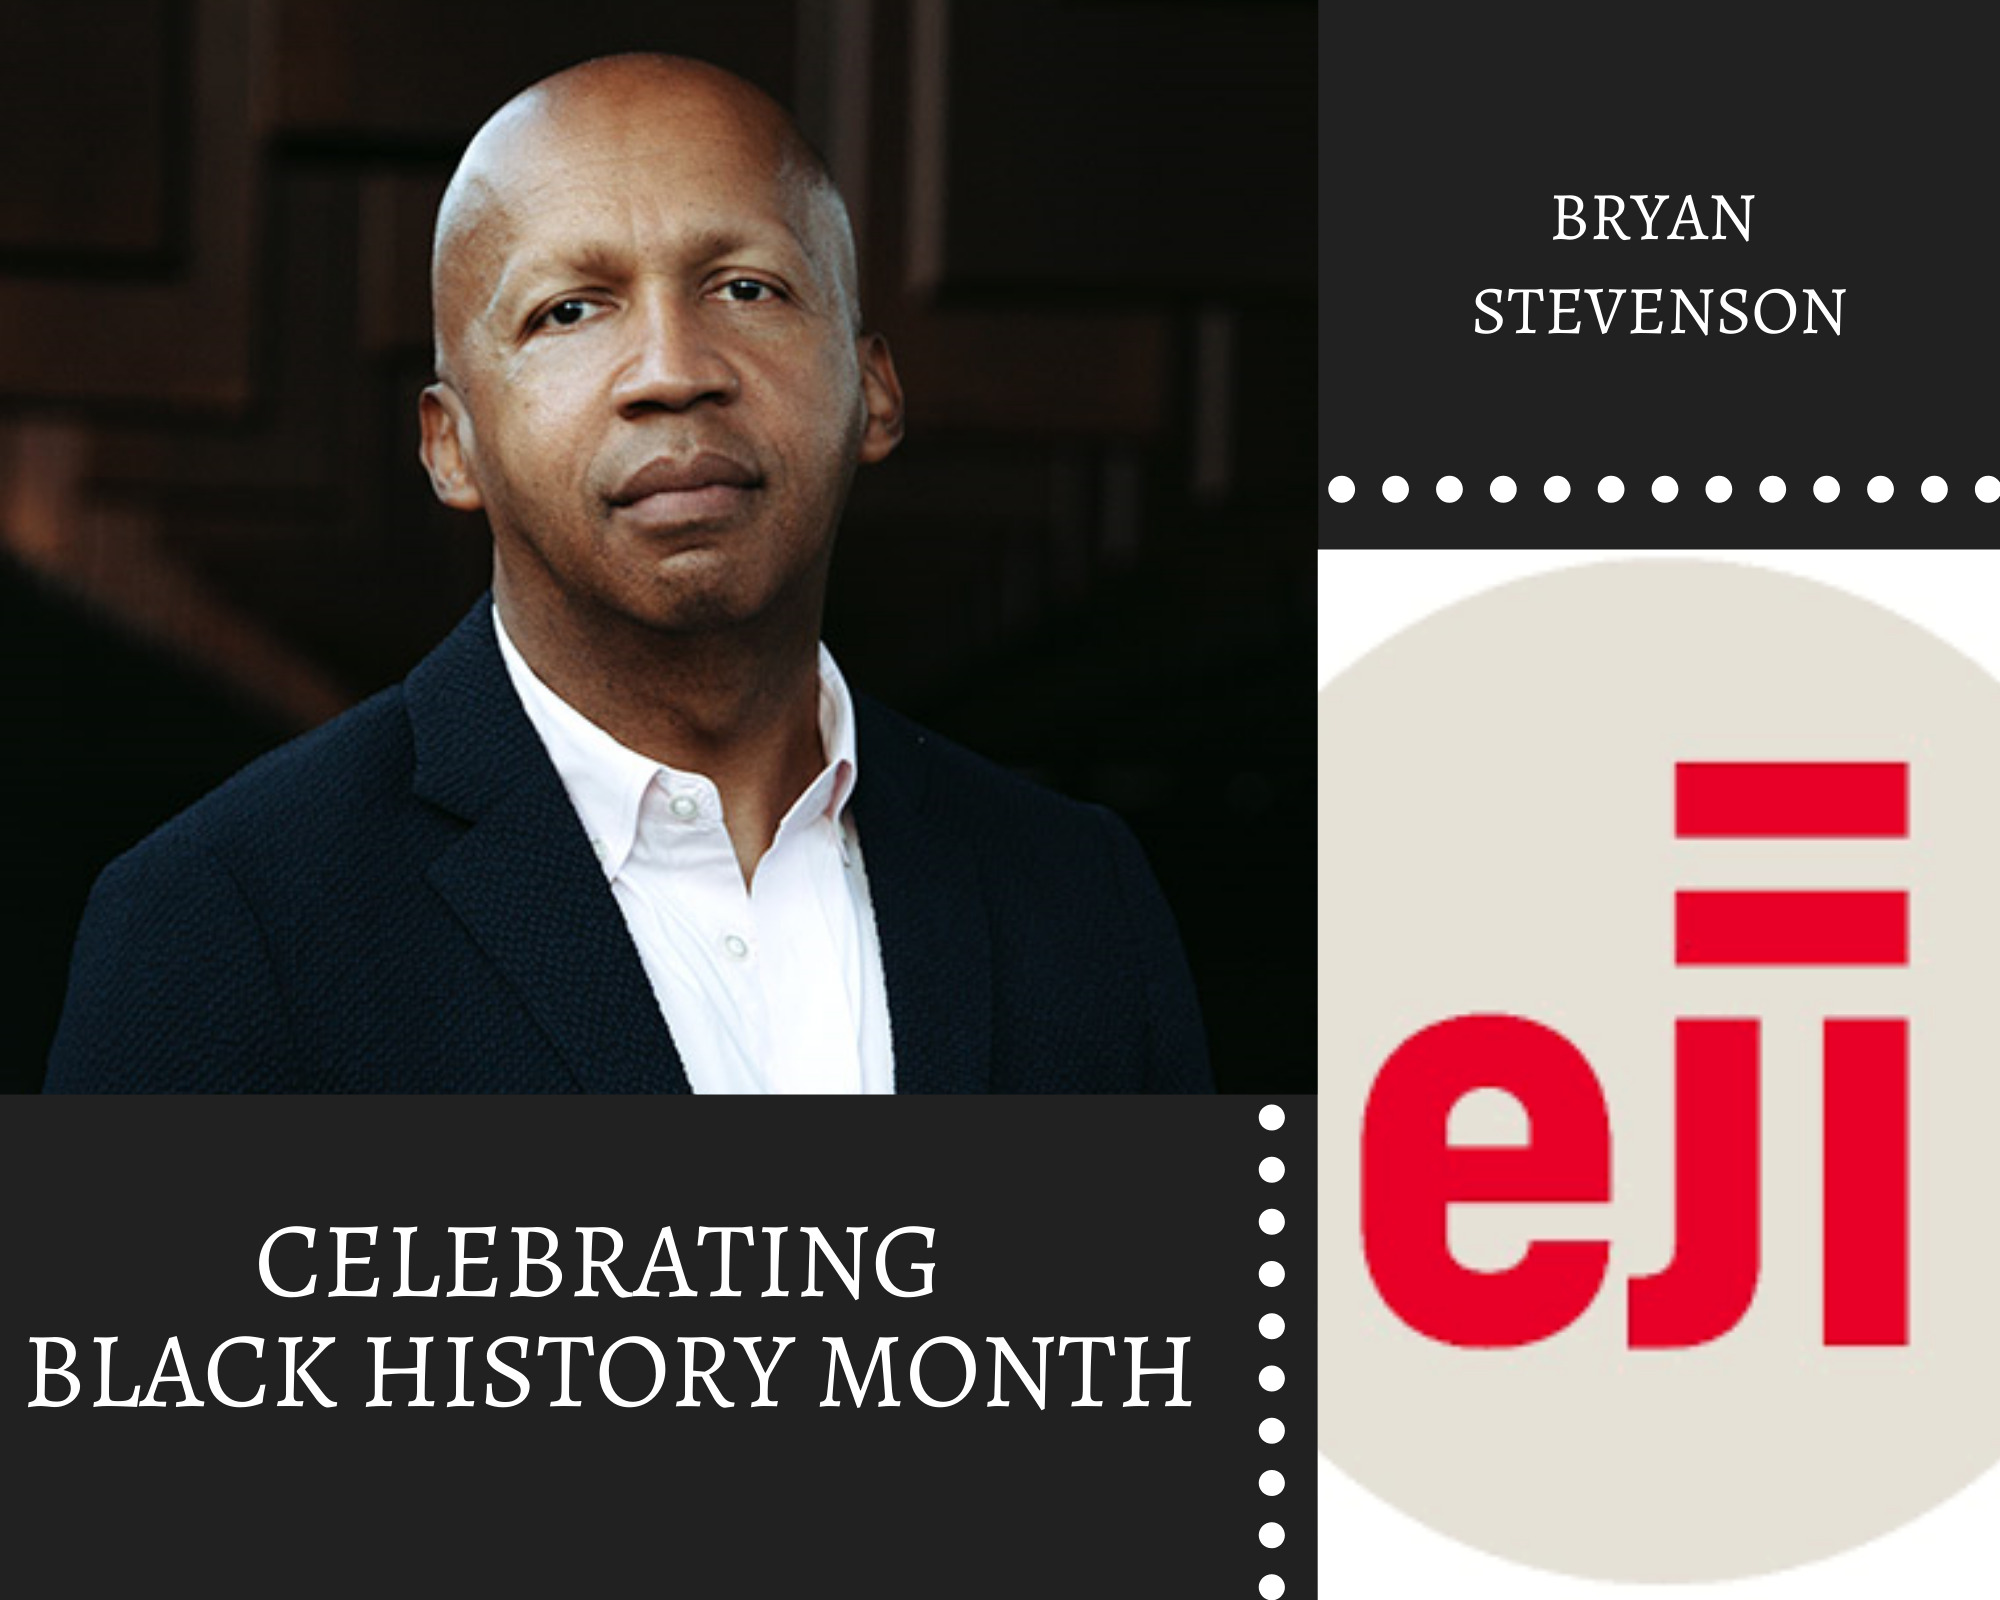 Christian Academy School System | Celebrating Black History Month | Bryan Stevenson